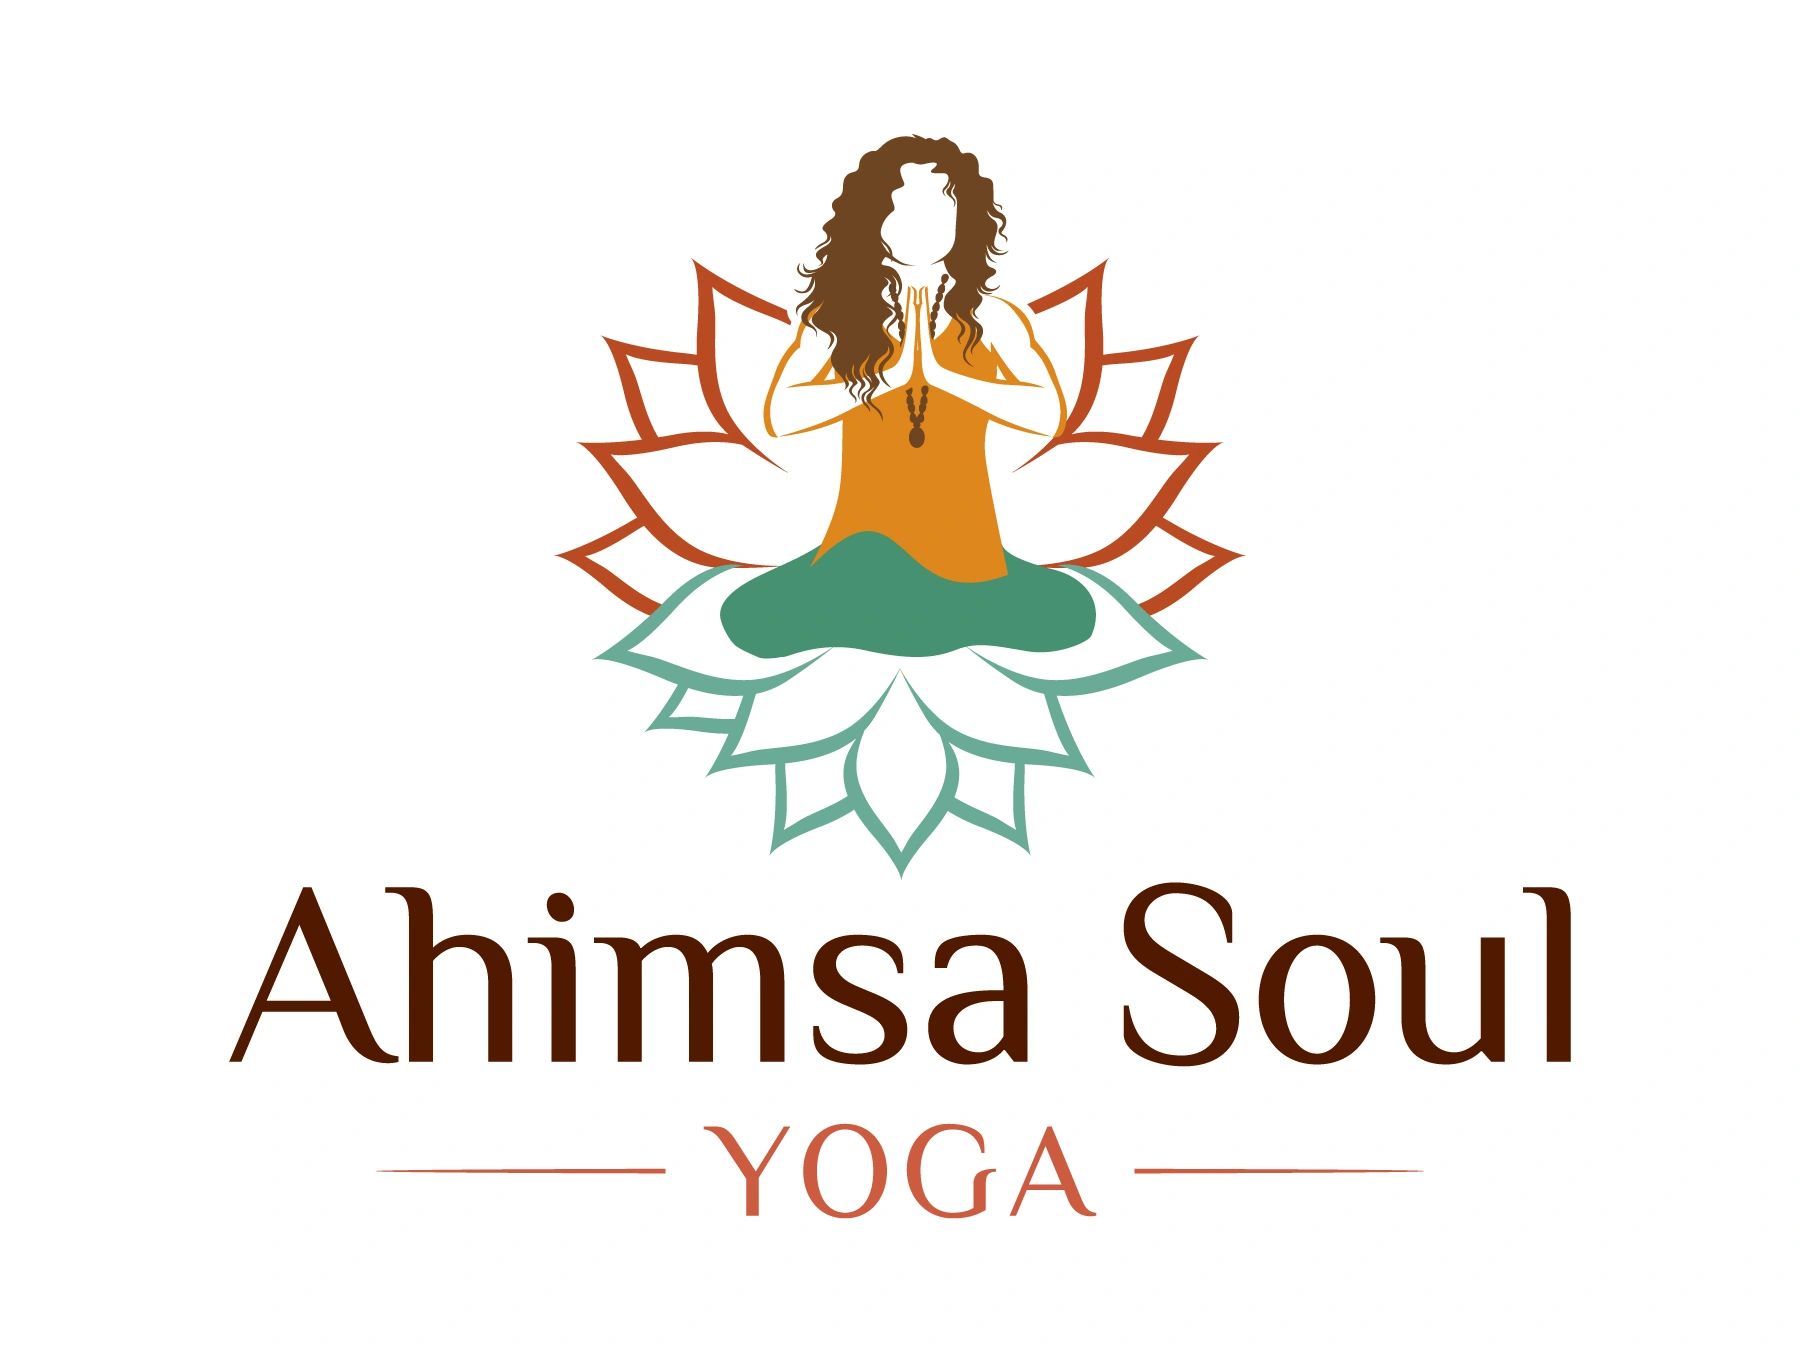 Ahimsa Soul Yoga - Home